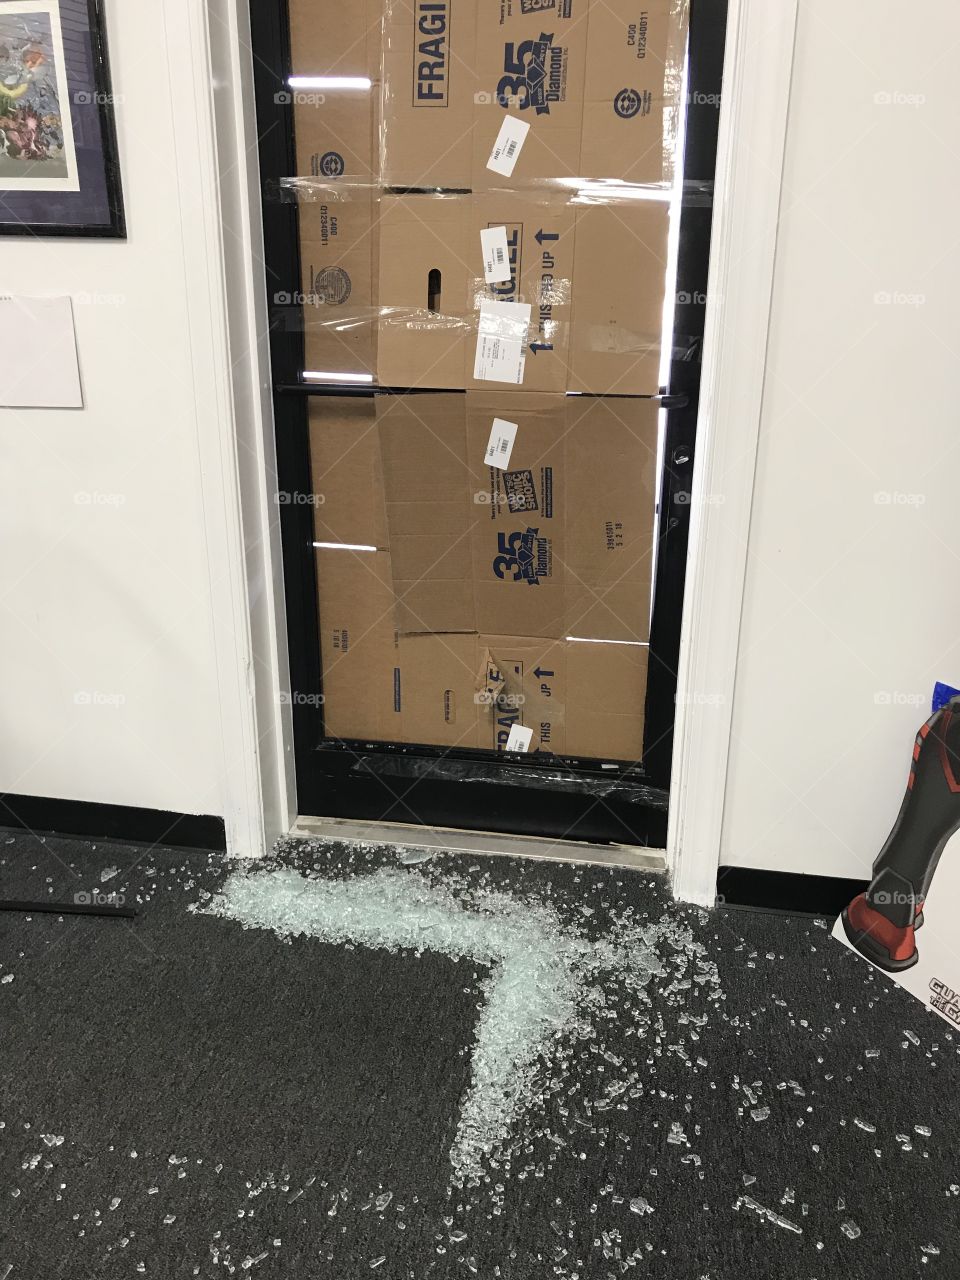 Smashed door covered in cardboard